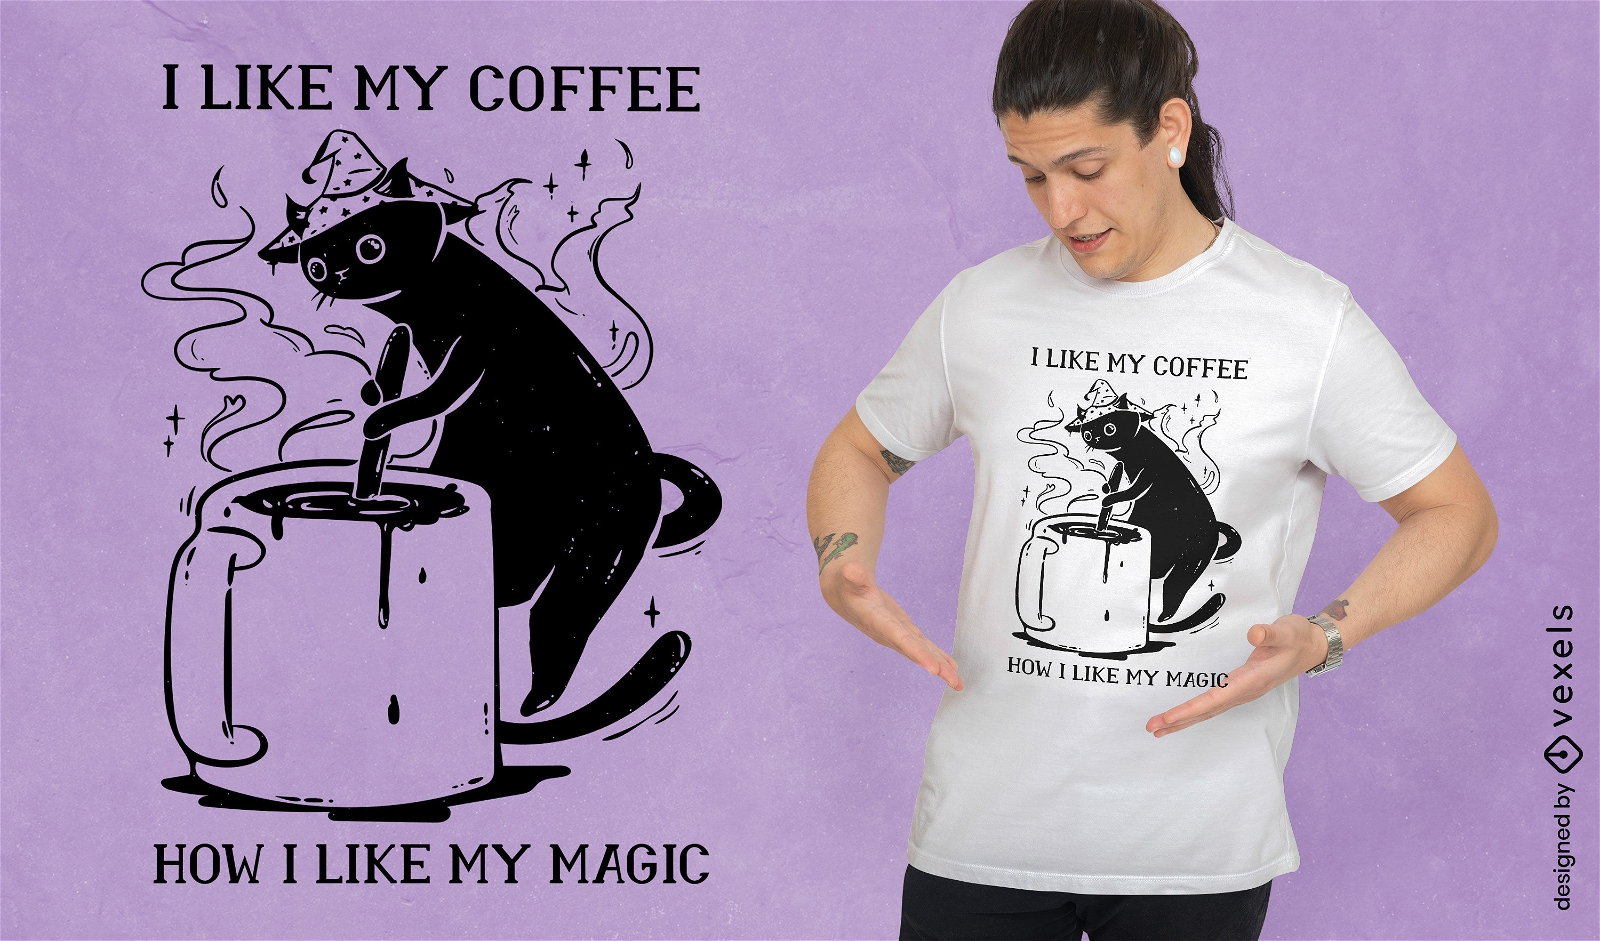 Dise?o de camiseta de gato de caf? y magia negra.